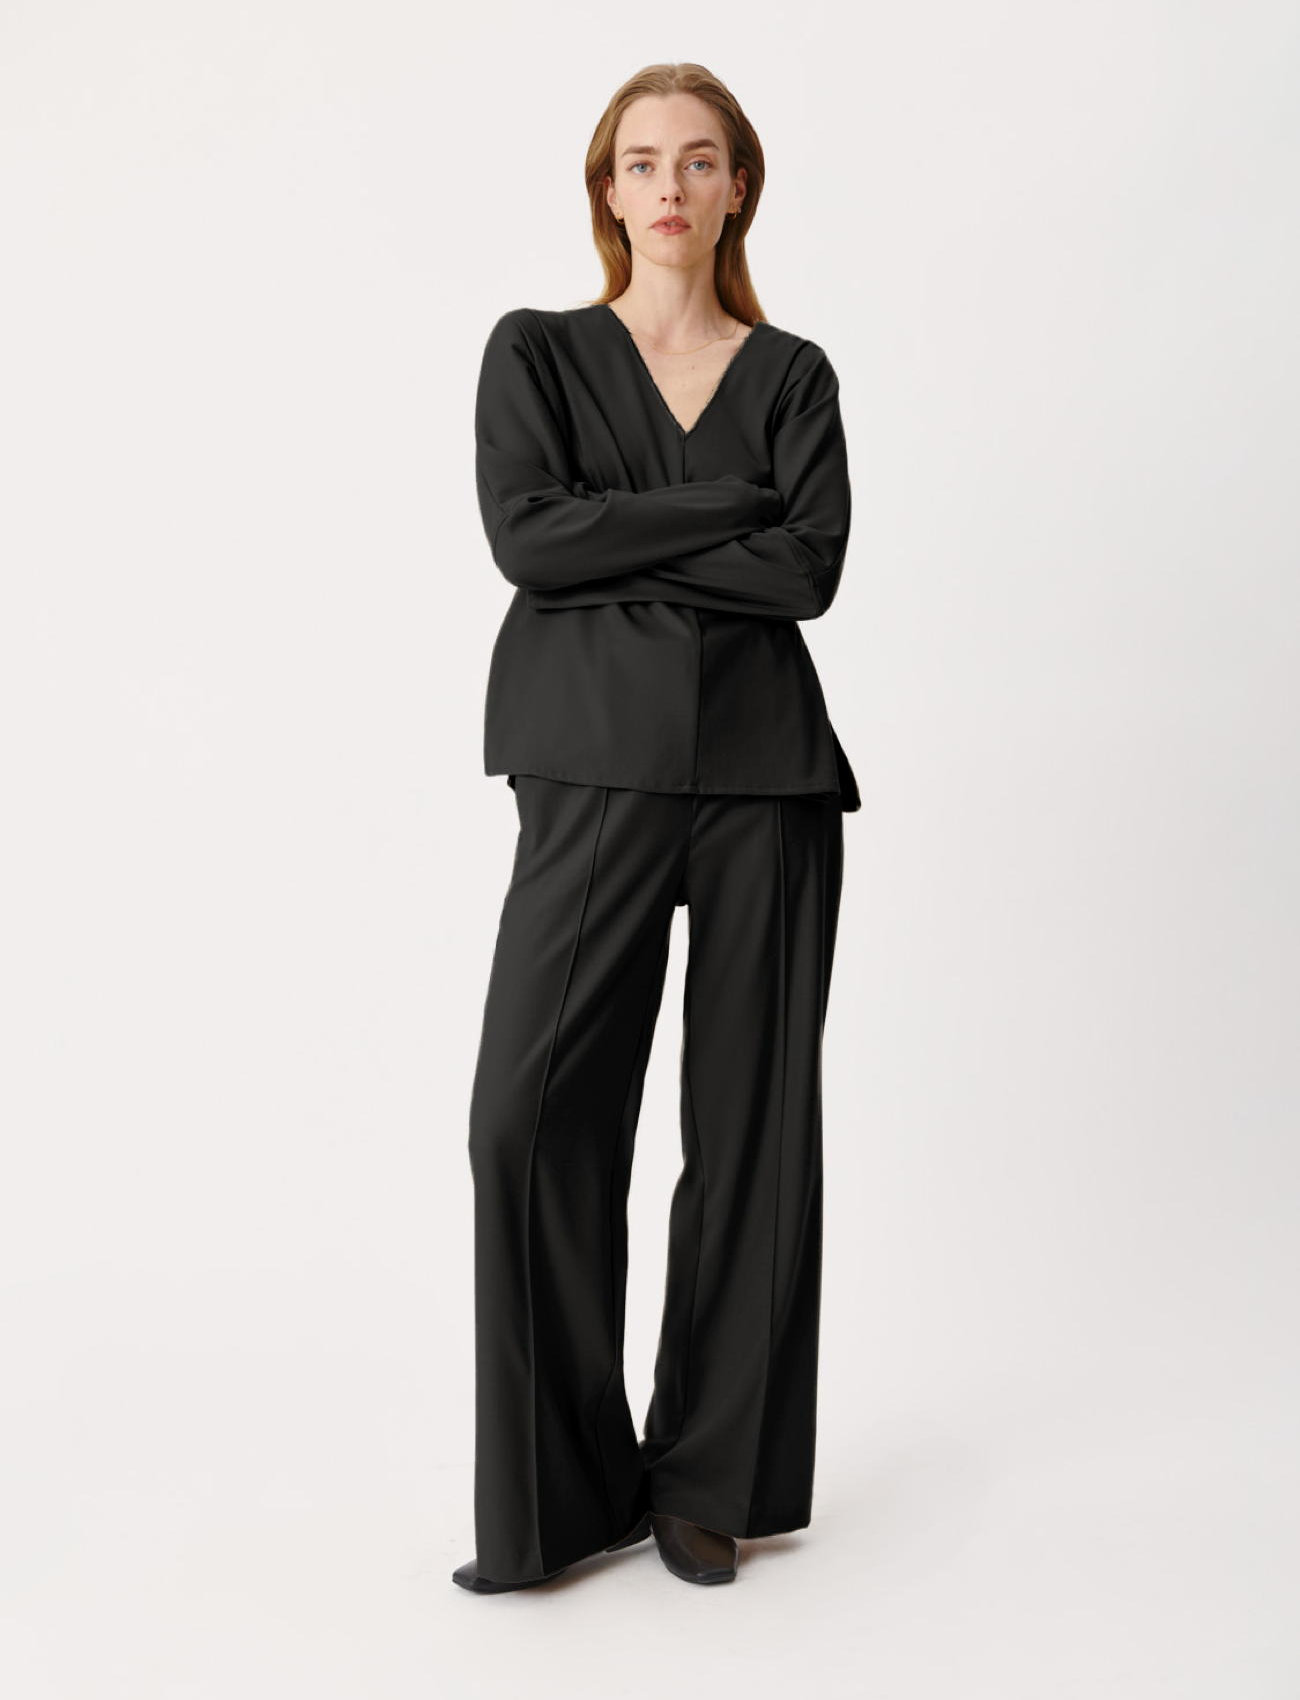 A Part Of The Art - OFF DUTY V-NECK SWEATER - blouses met lange mouwen - black - 1